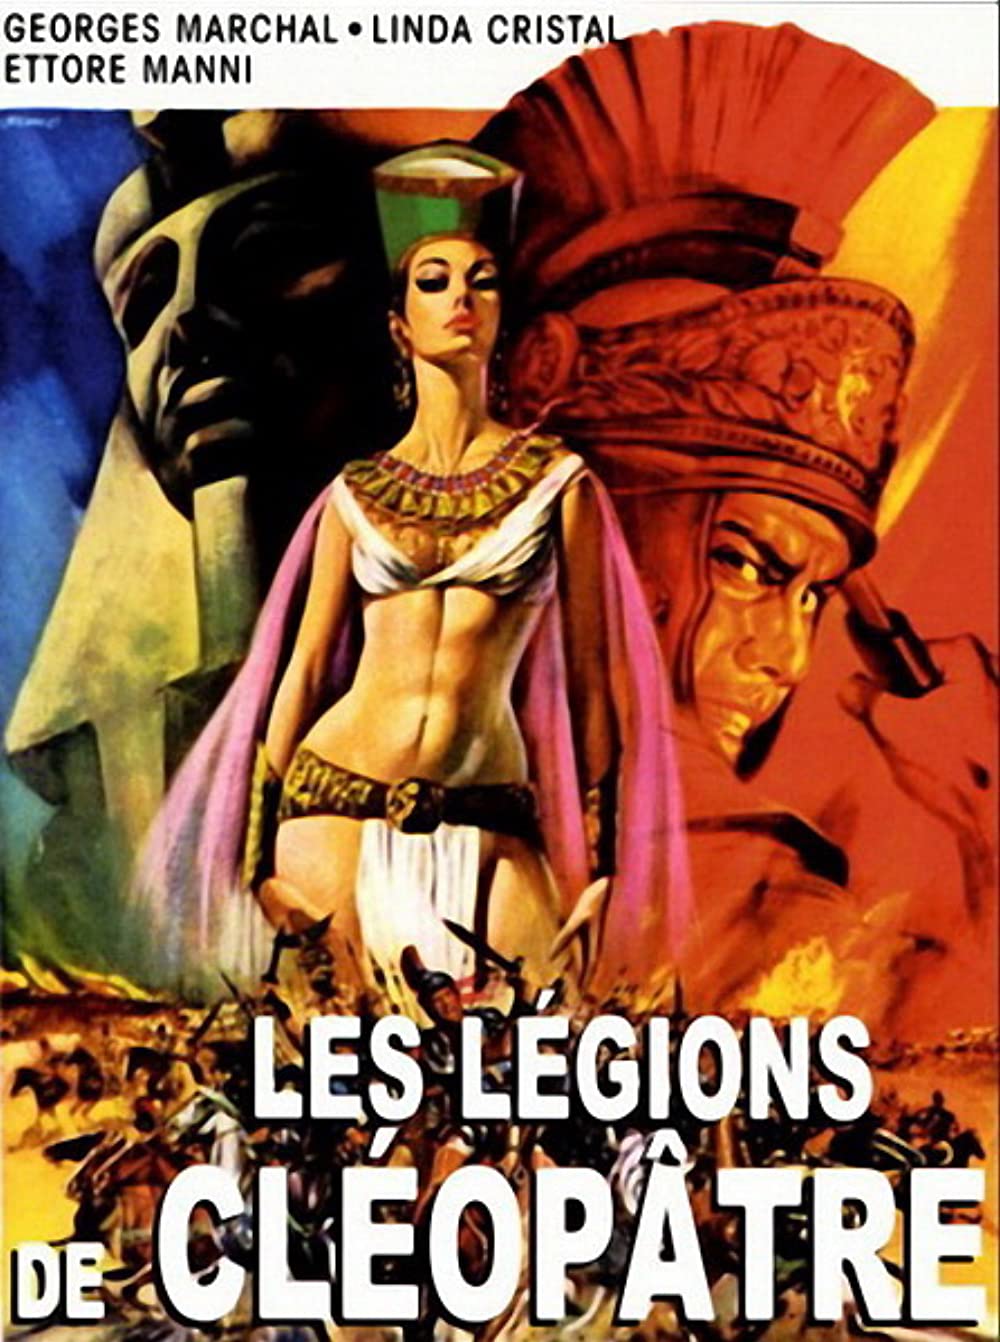 Le legioni di Cleopatra Aka The Legions of Cleopatra (1959)